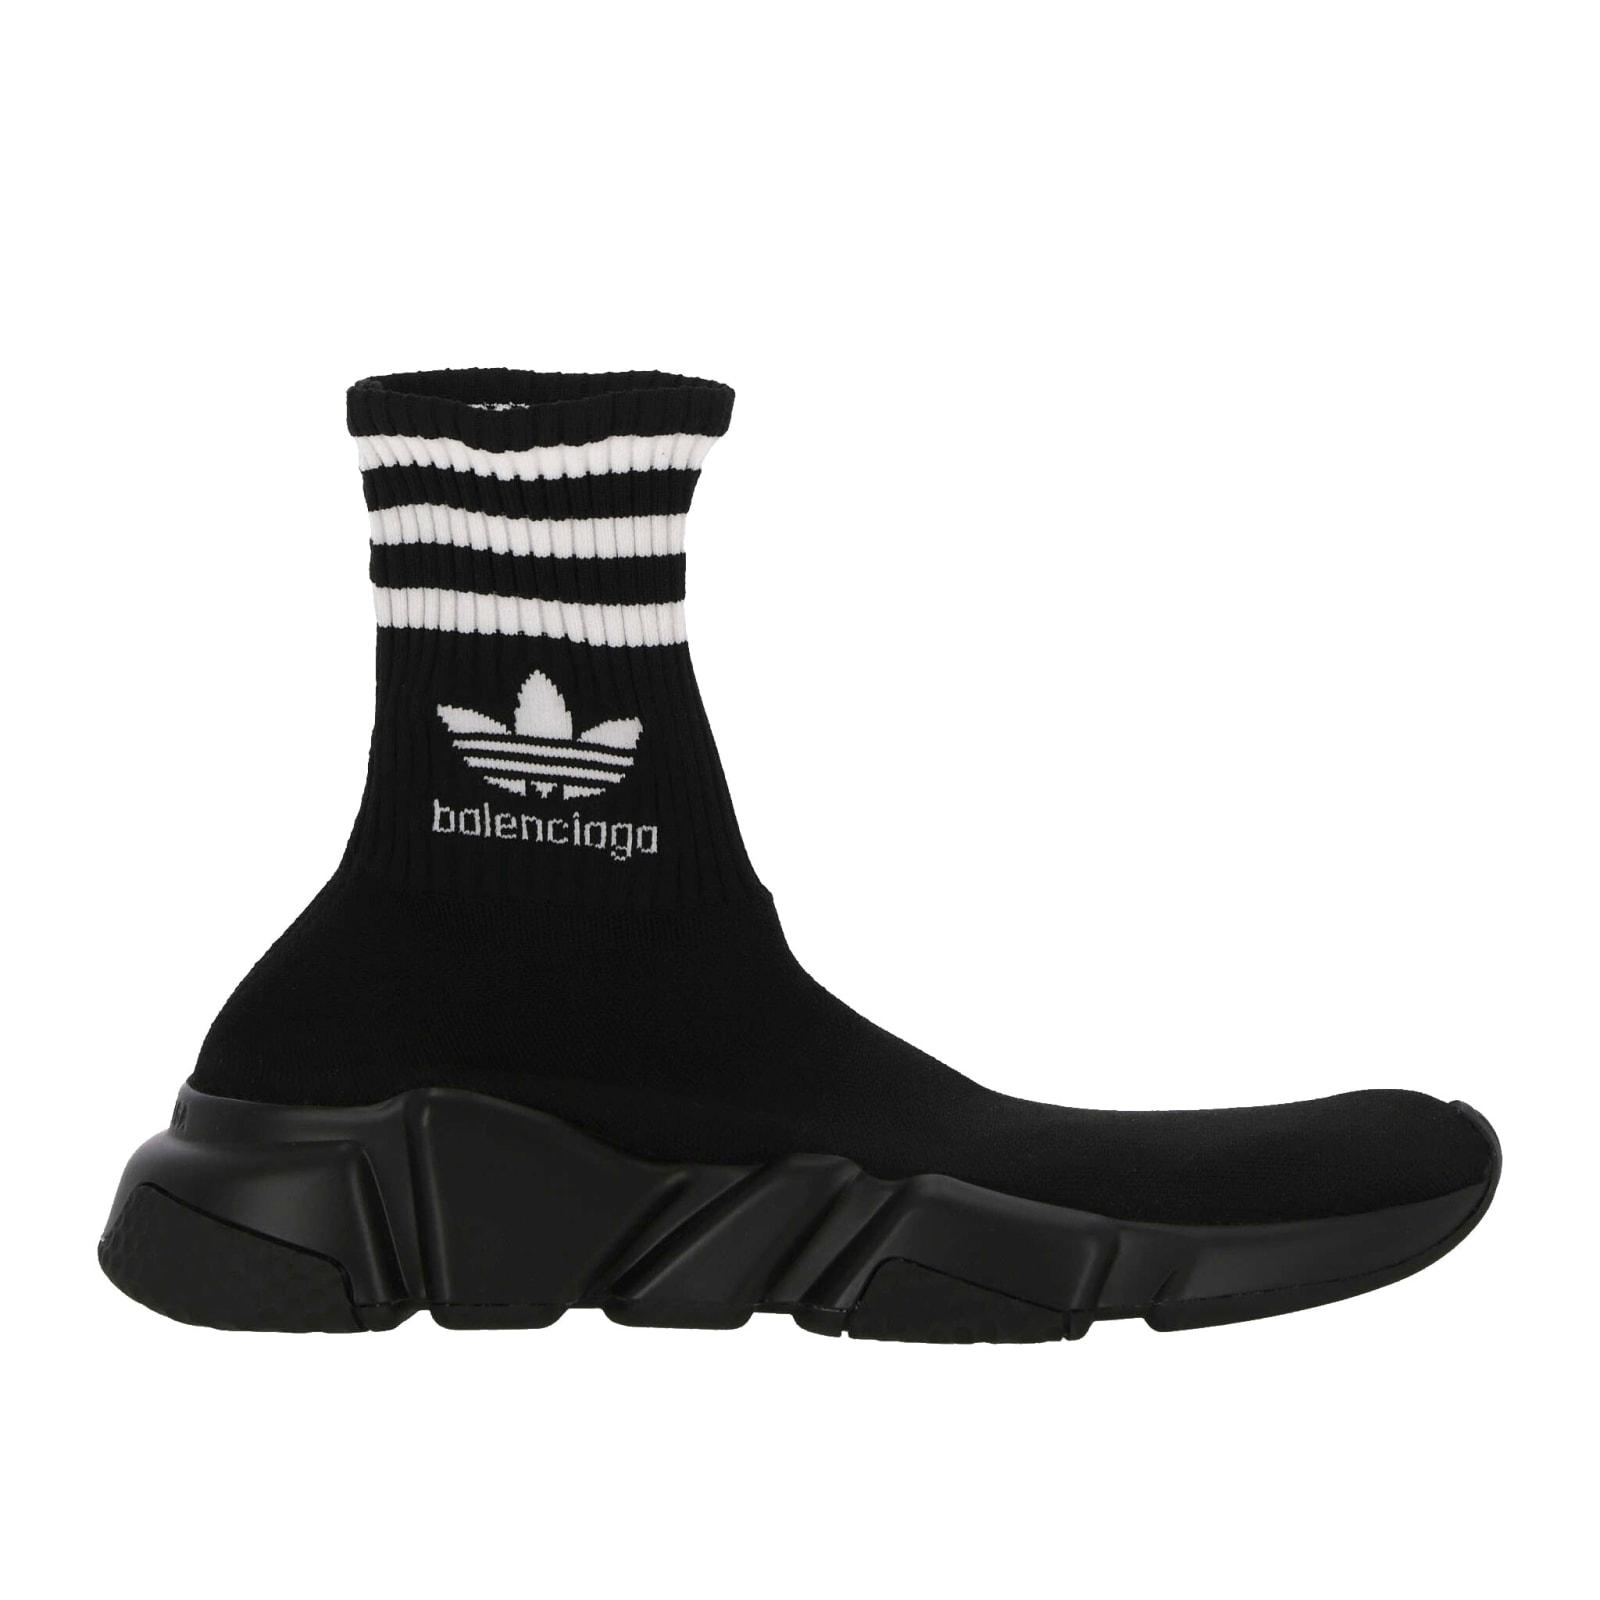 Balenciaga X Adidas "speed" Sneakers in Black | Lyst